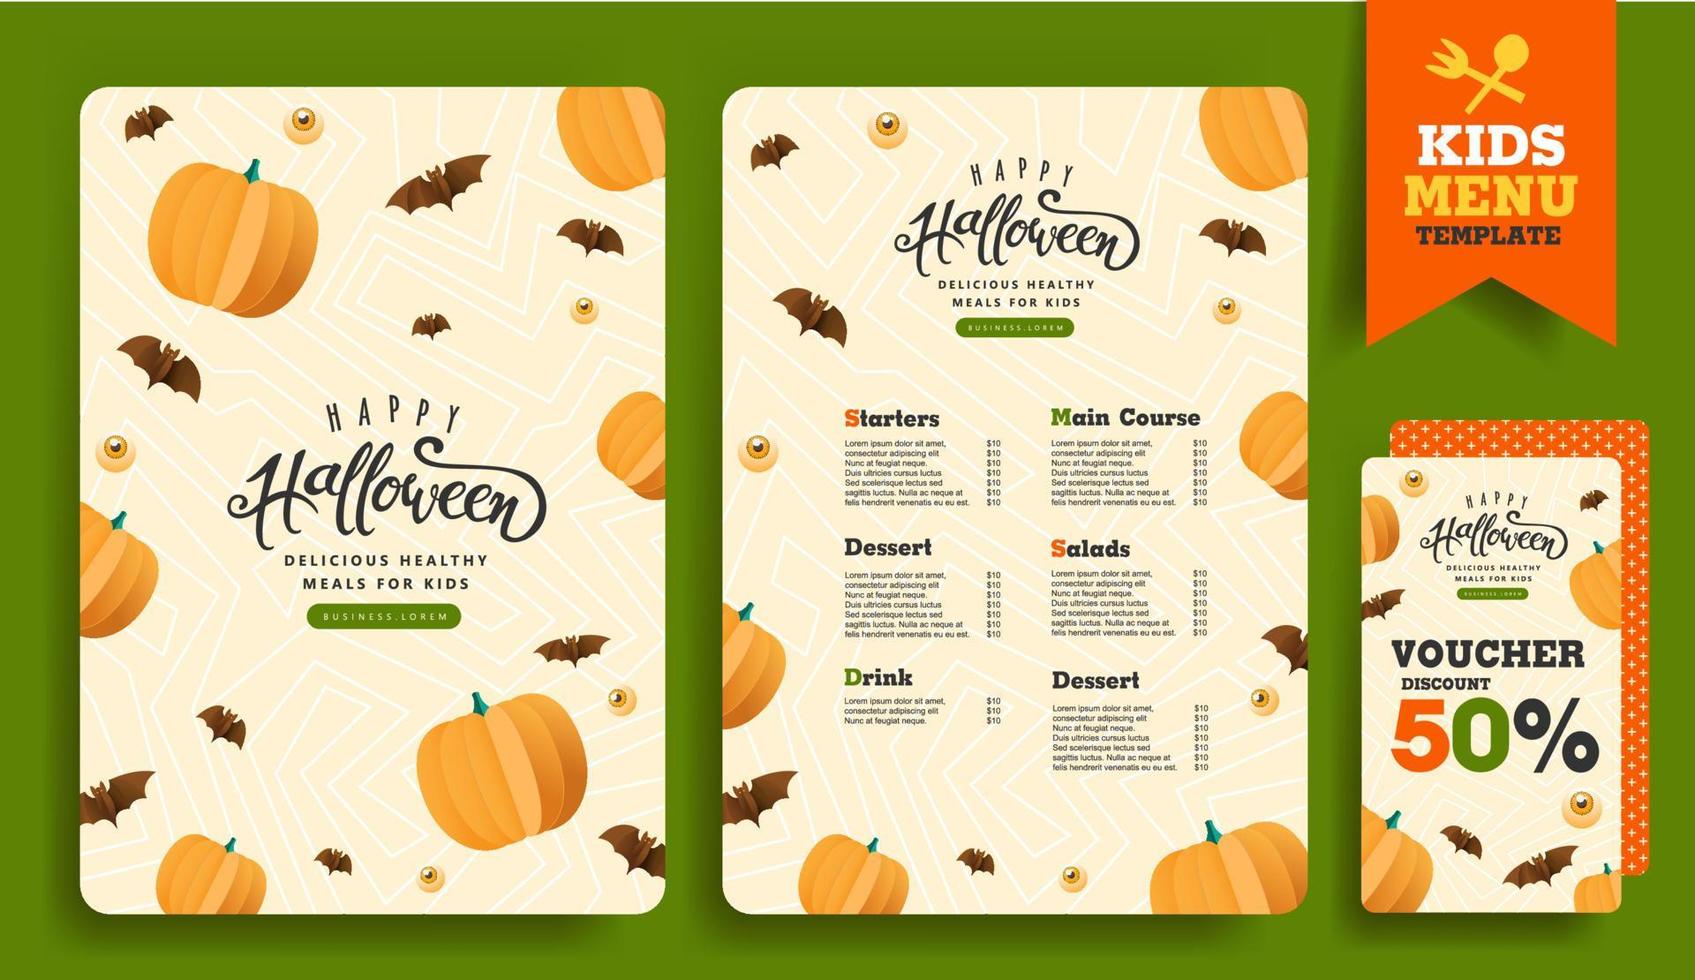 Halloween kids menu template with Cute cartoon halloween characters vector